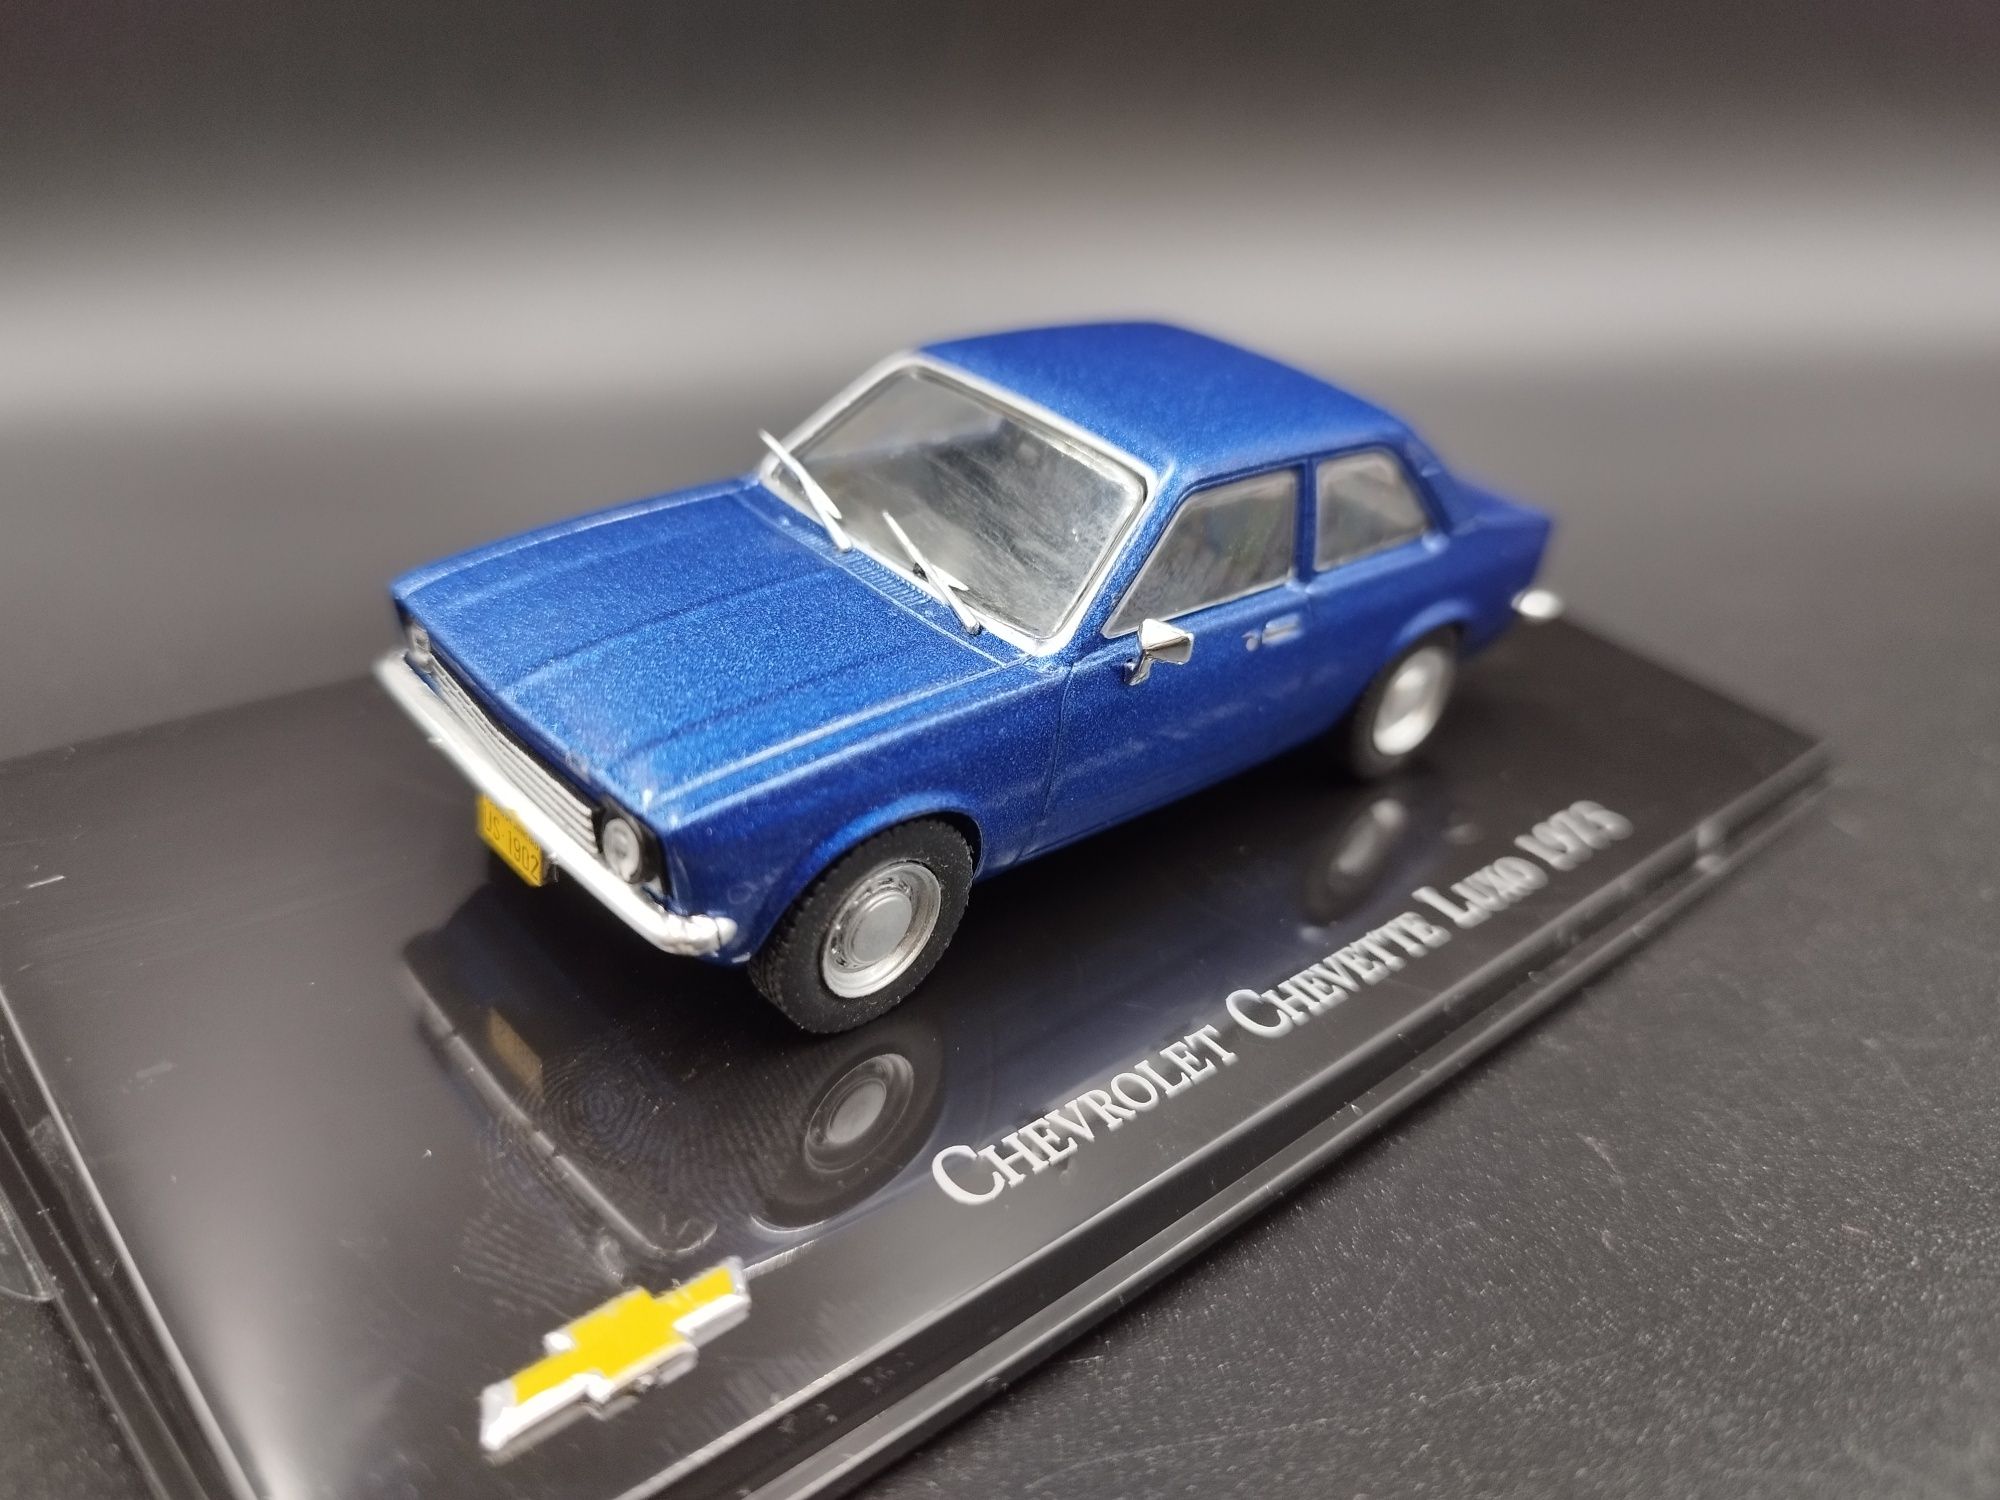 1:43 Altaya 1973 Chevrolet Chevette Luxo model